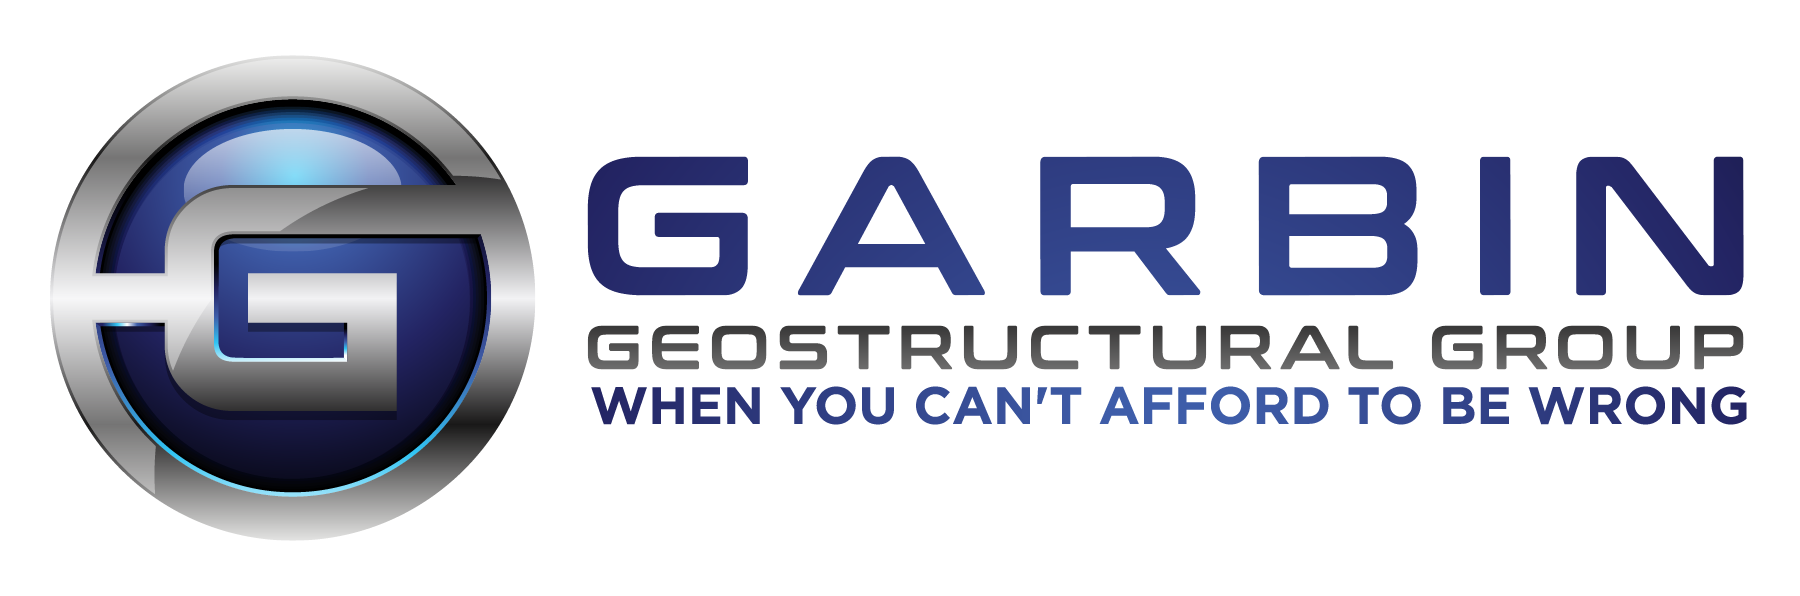 Garbin-Geostructural-Group-Logo.jpg